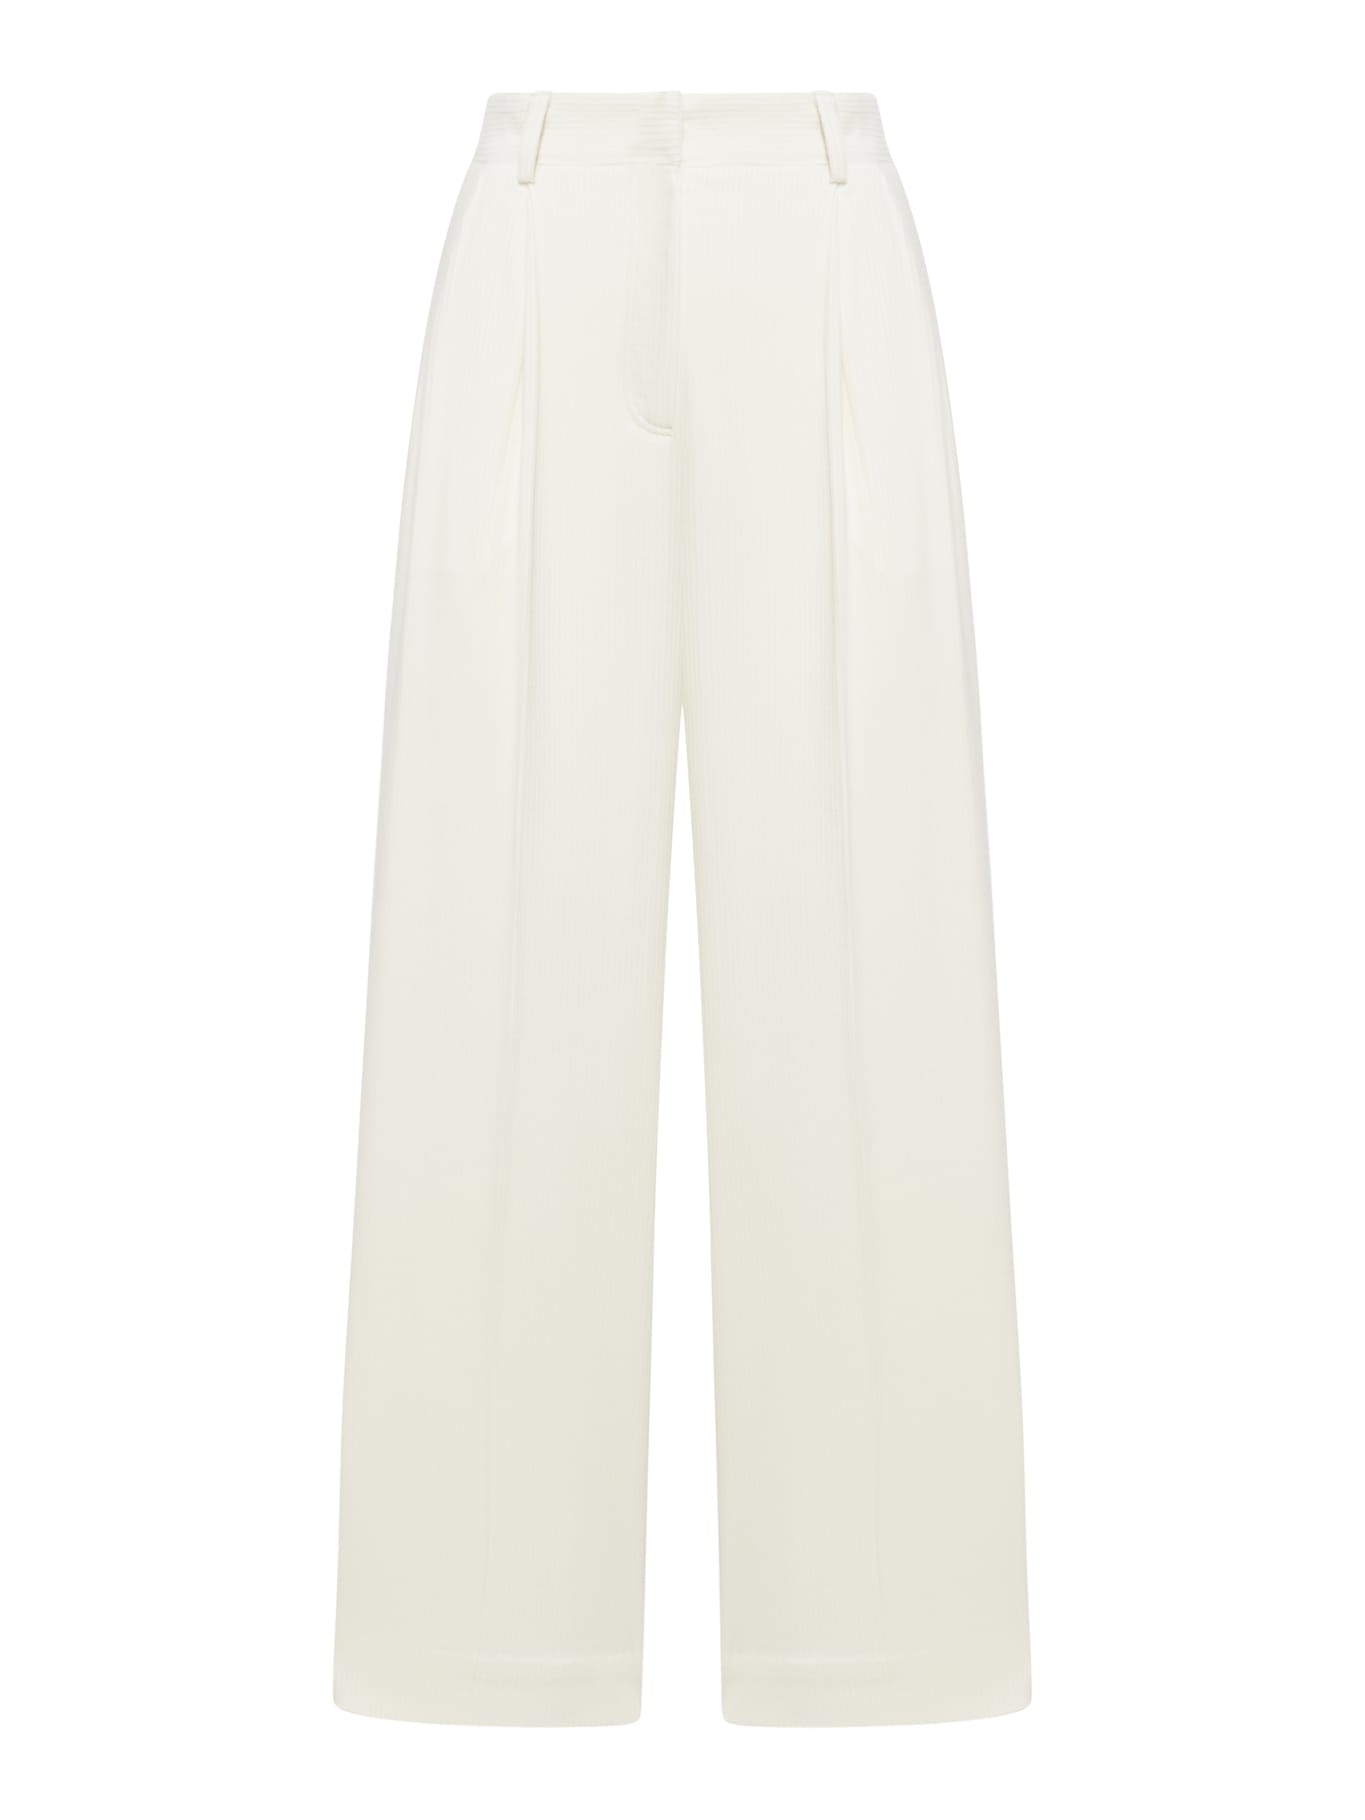 Totême Silk Cotton Cord Trousers In White